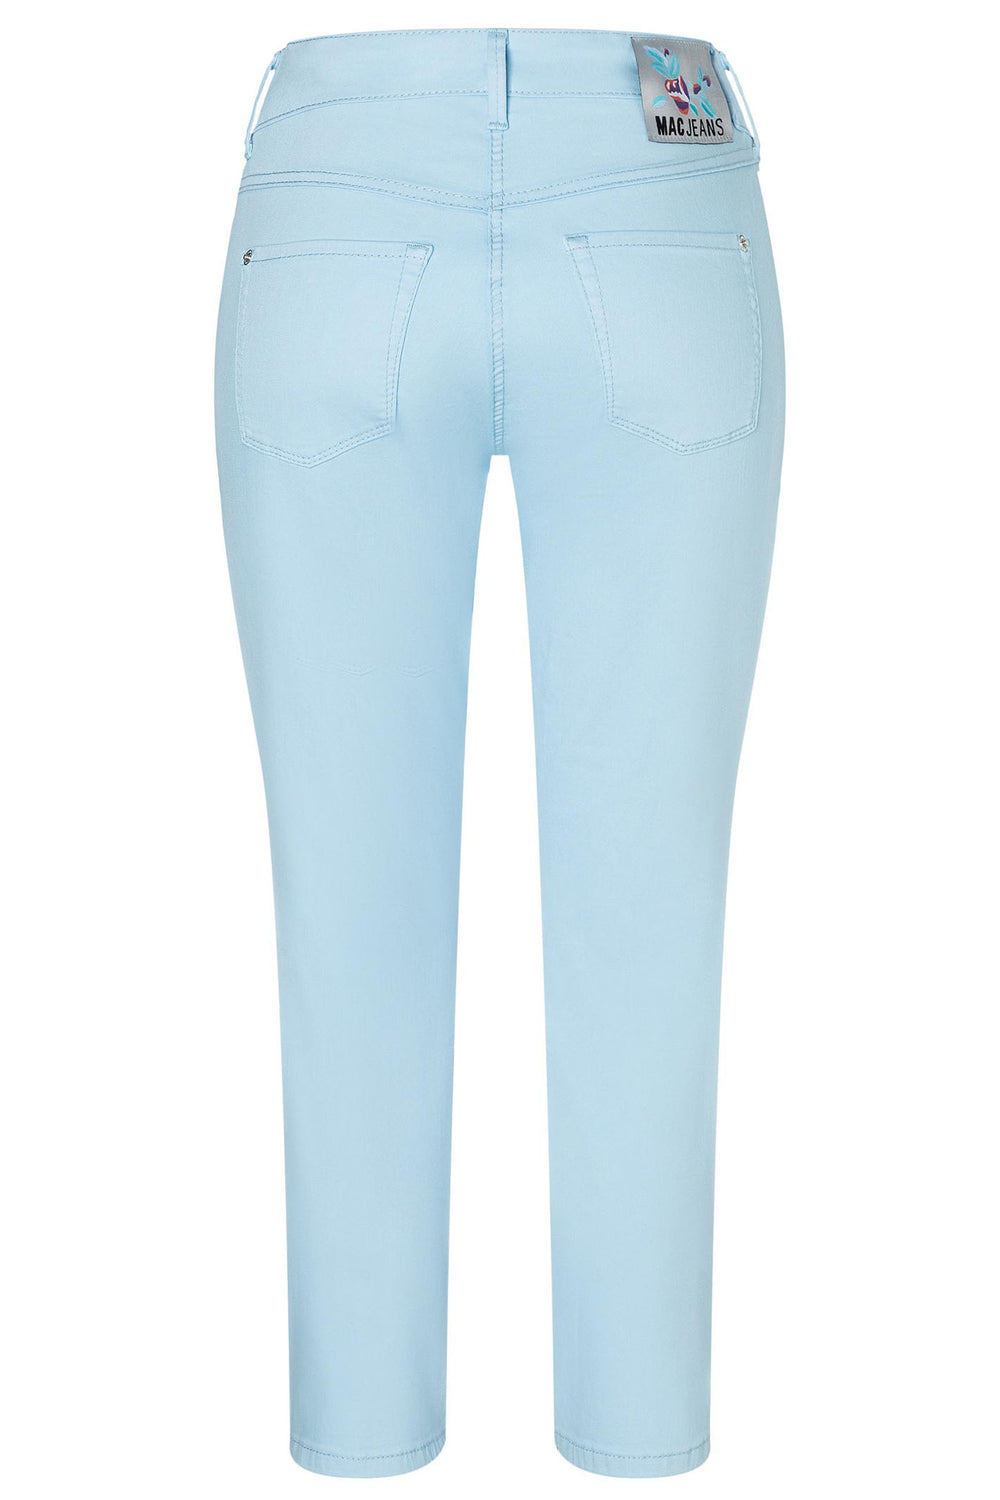 Mac 5492-00-0351 171R Dream Dusk Blue Wonder Light Denim Jeans - Shirley Allum Boutique